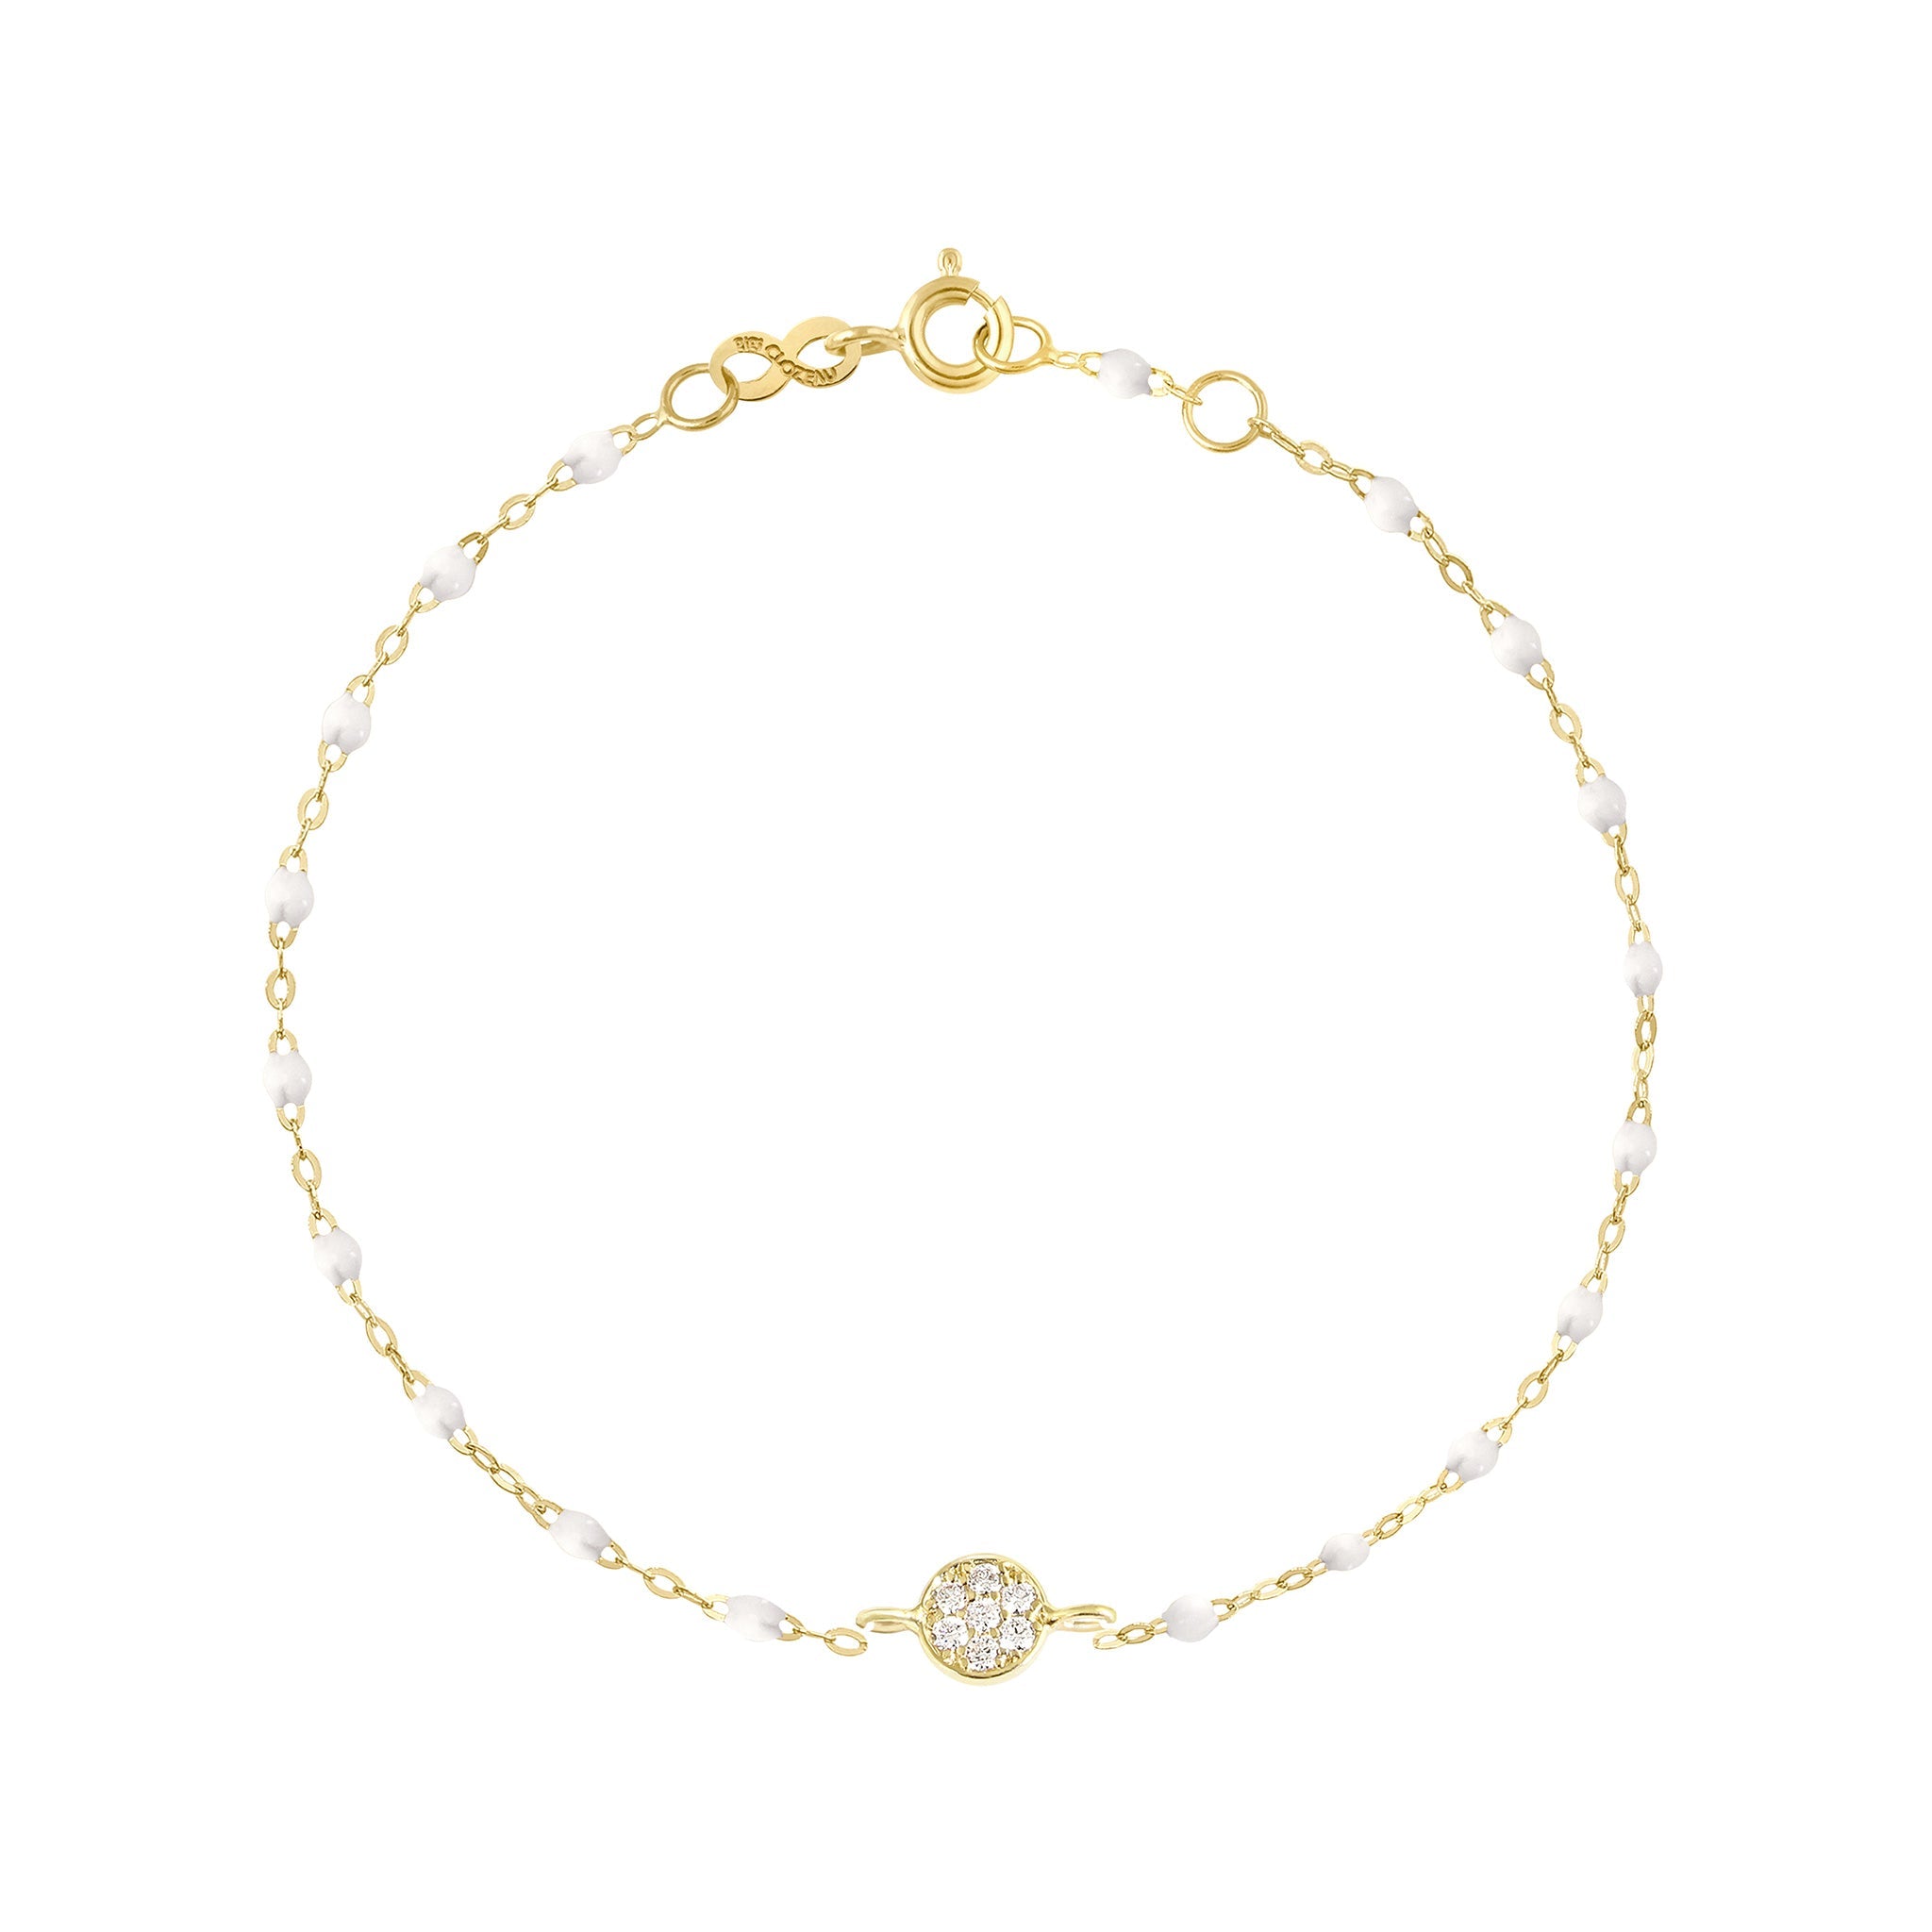 Bracelet blanc Puce diamants, or jaune, 17 cm pirate Référence :  b3pu002j0117di -1